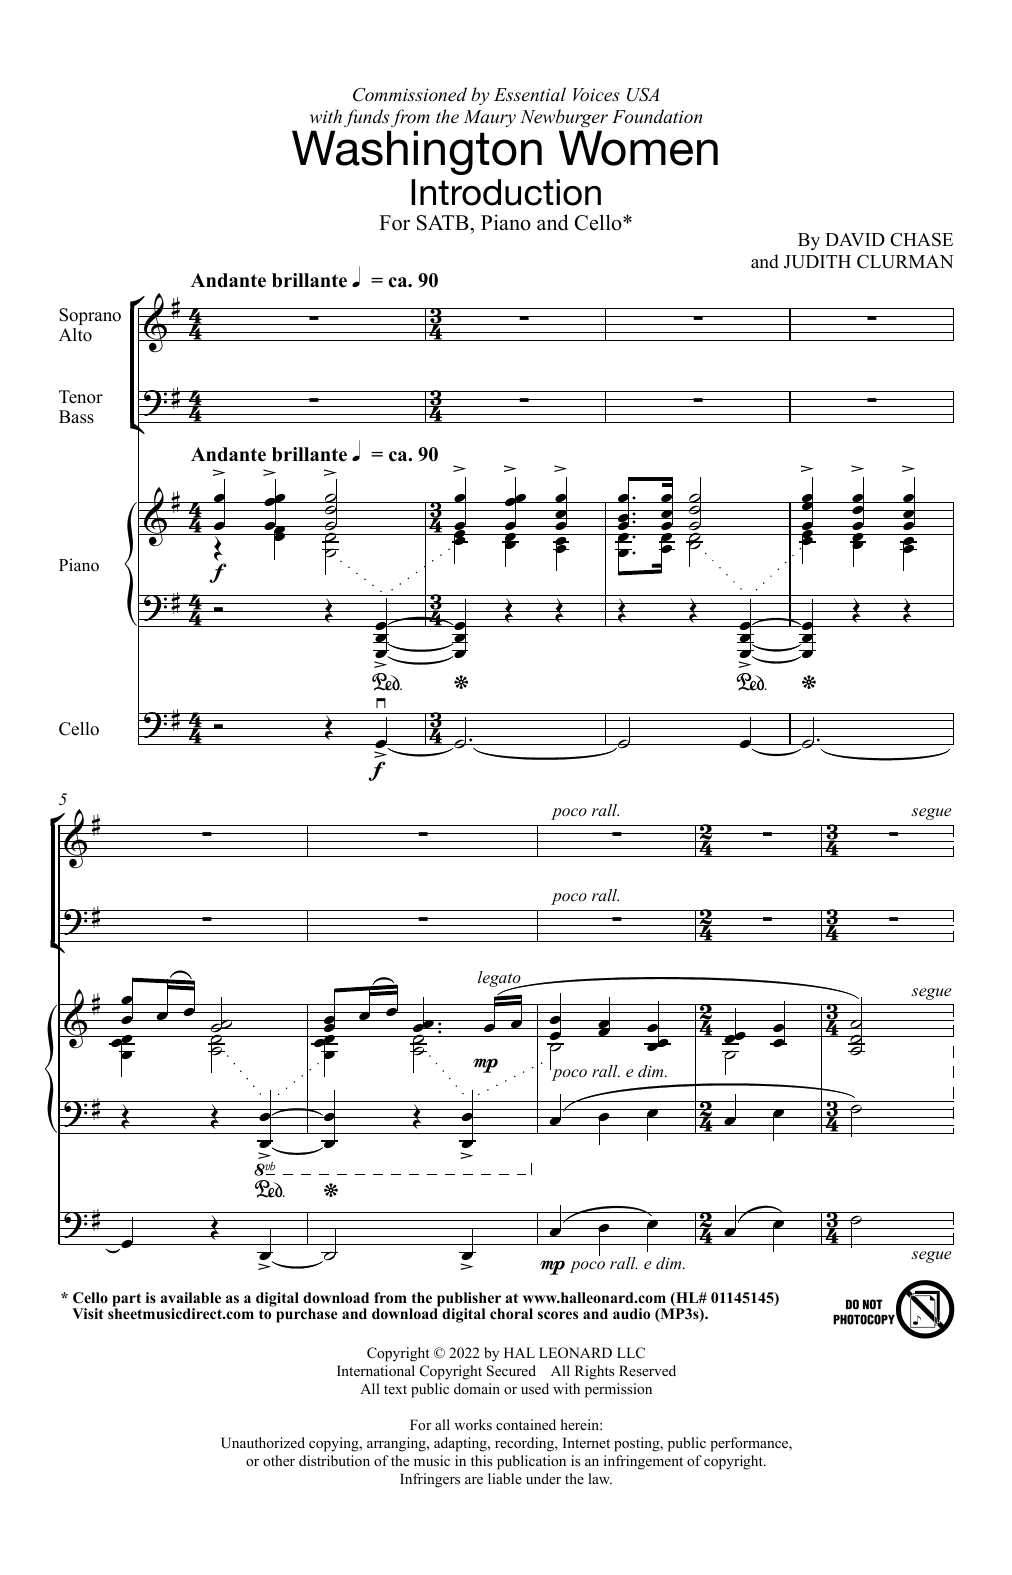 Download David Chase & Judith Clurman Washington Women Sheet Music and learn how to play SATB Choir PDF digital score in minutes